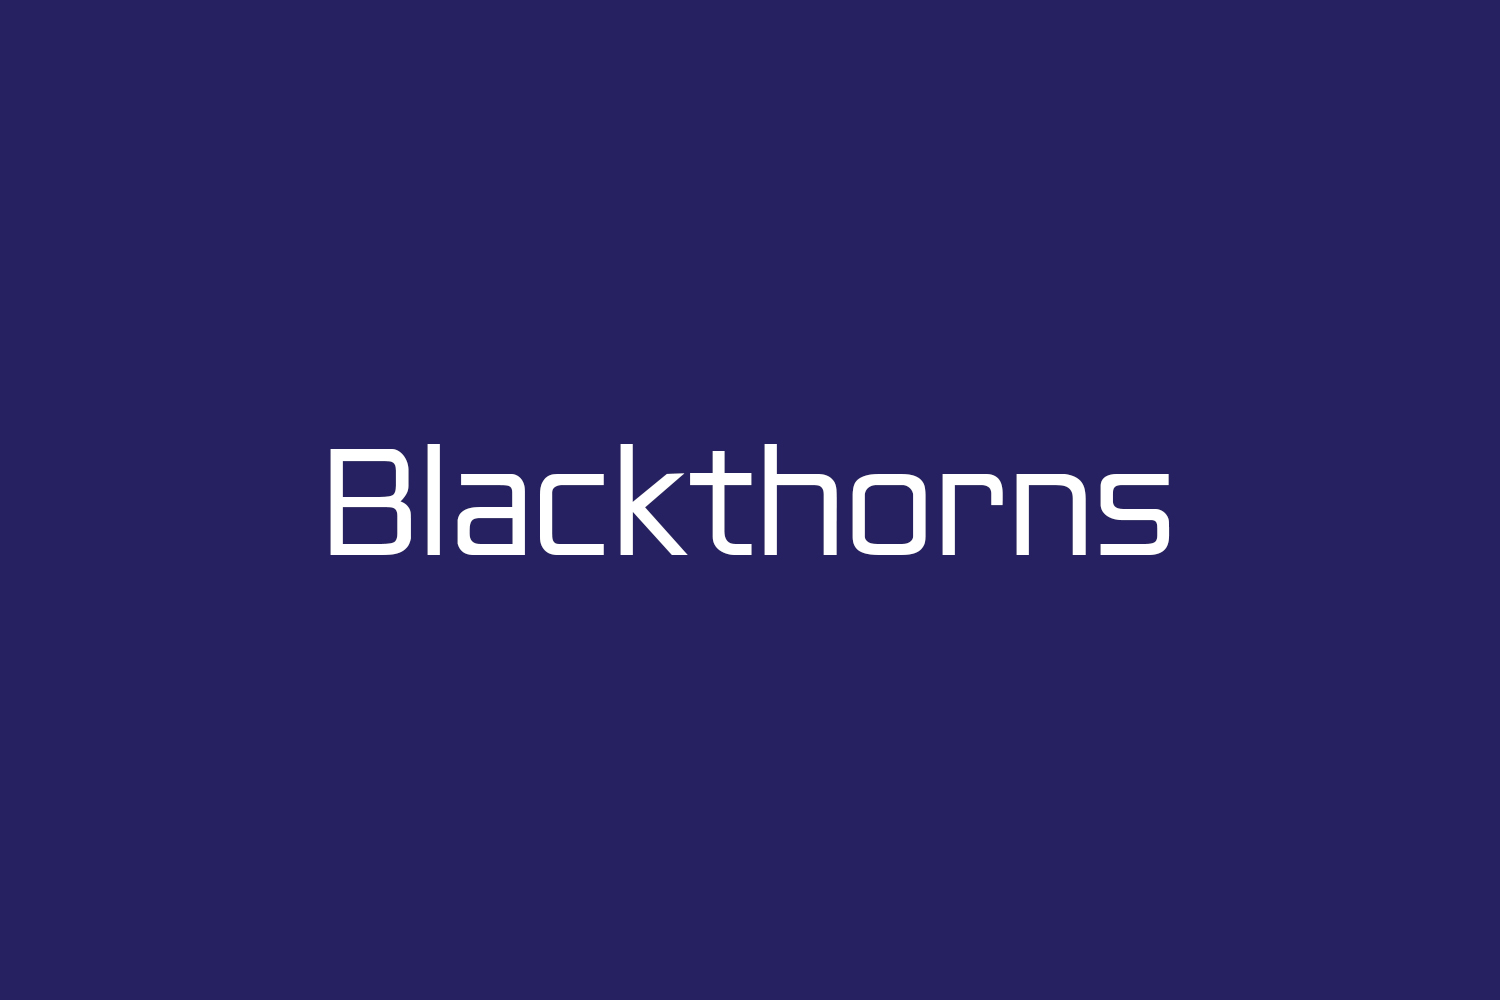 Blackthorns Free Font